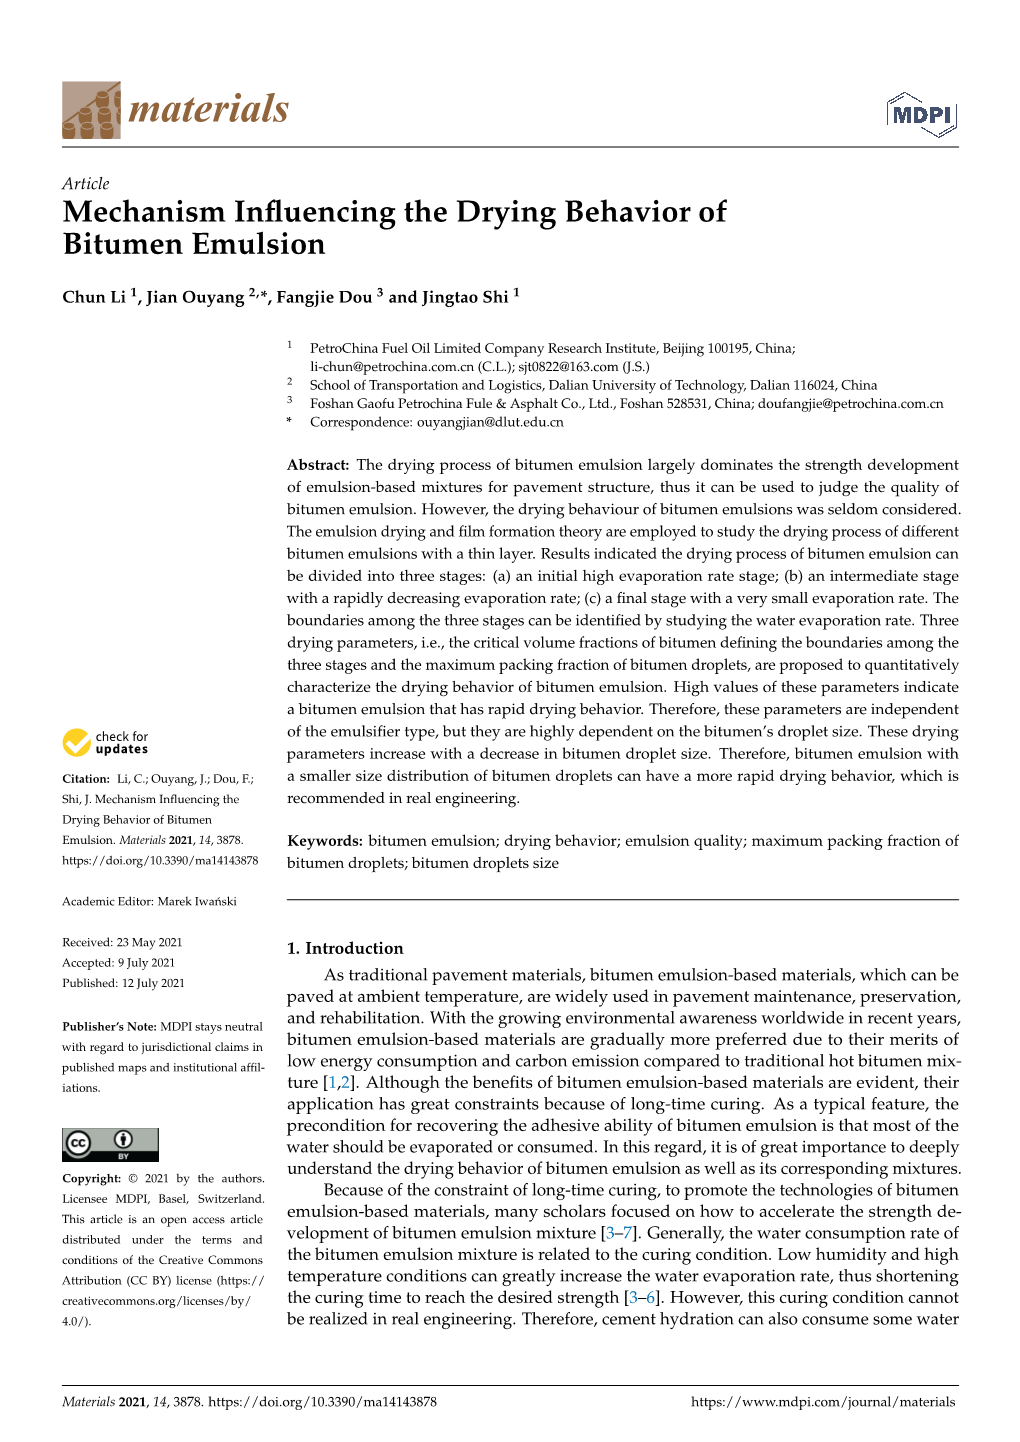 Mechanism Influencing the Drying Behavior of Bitumen Emulsion